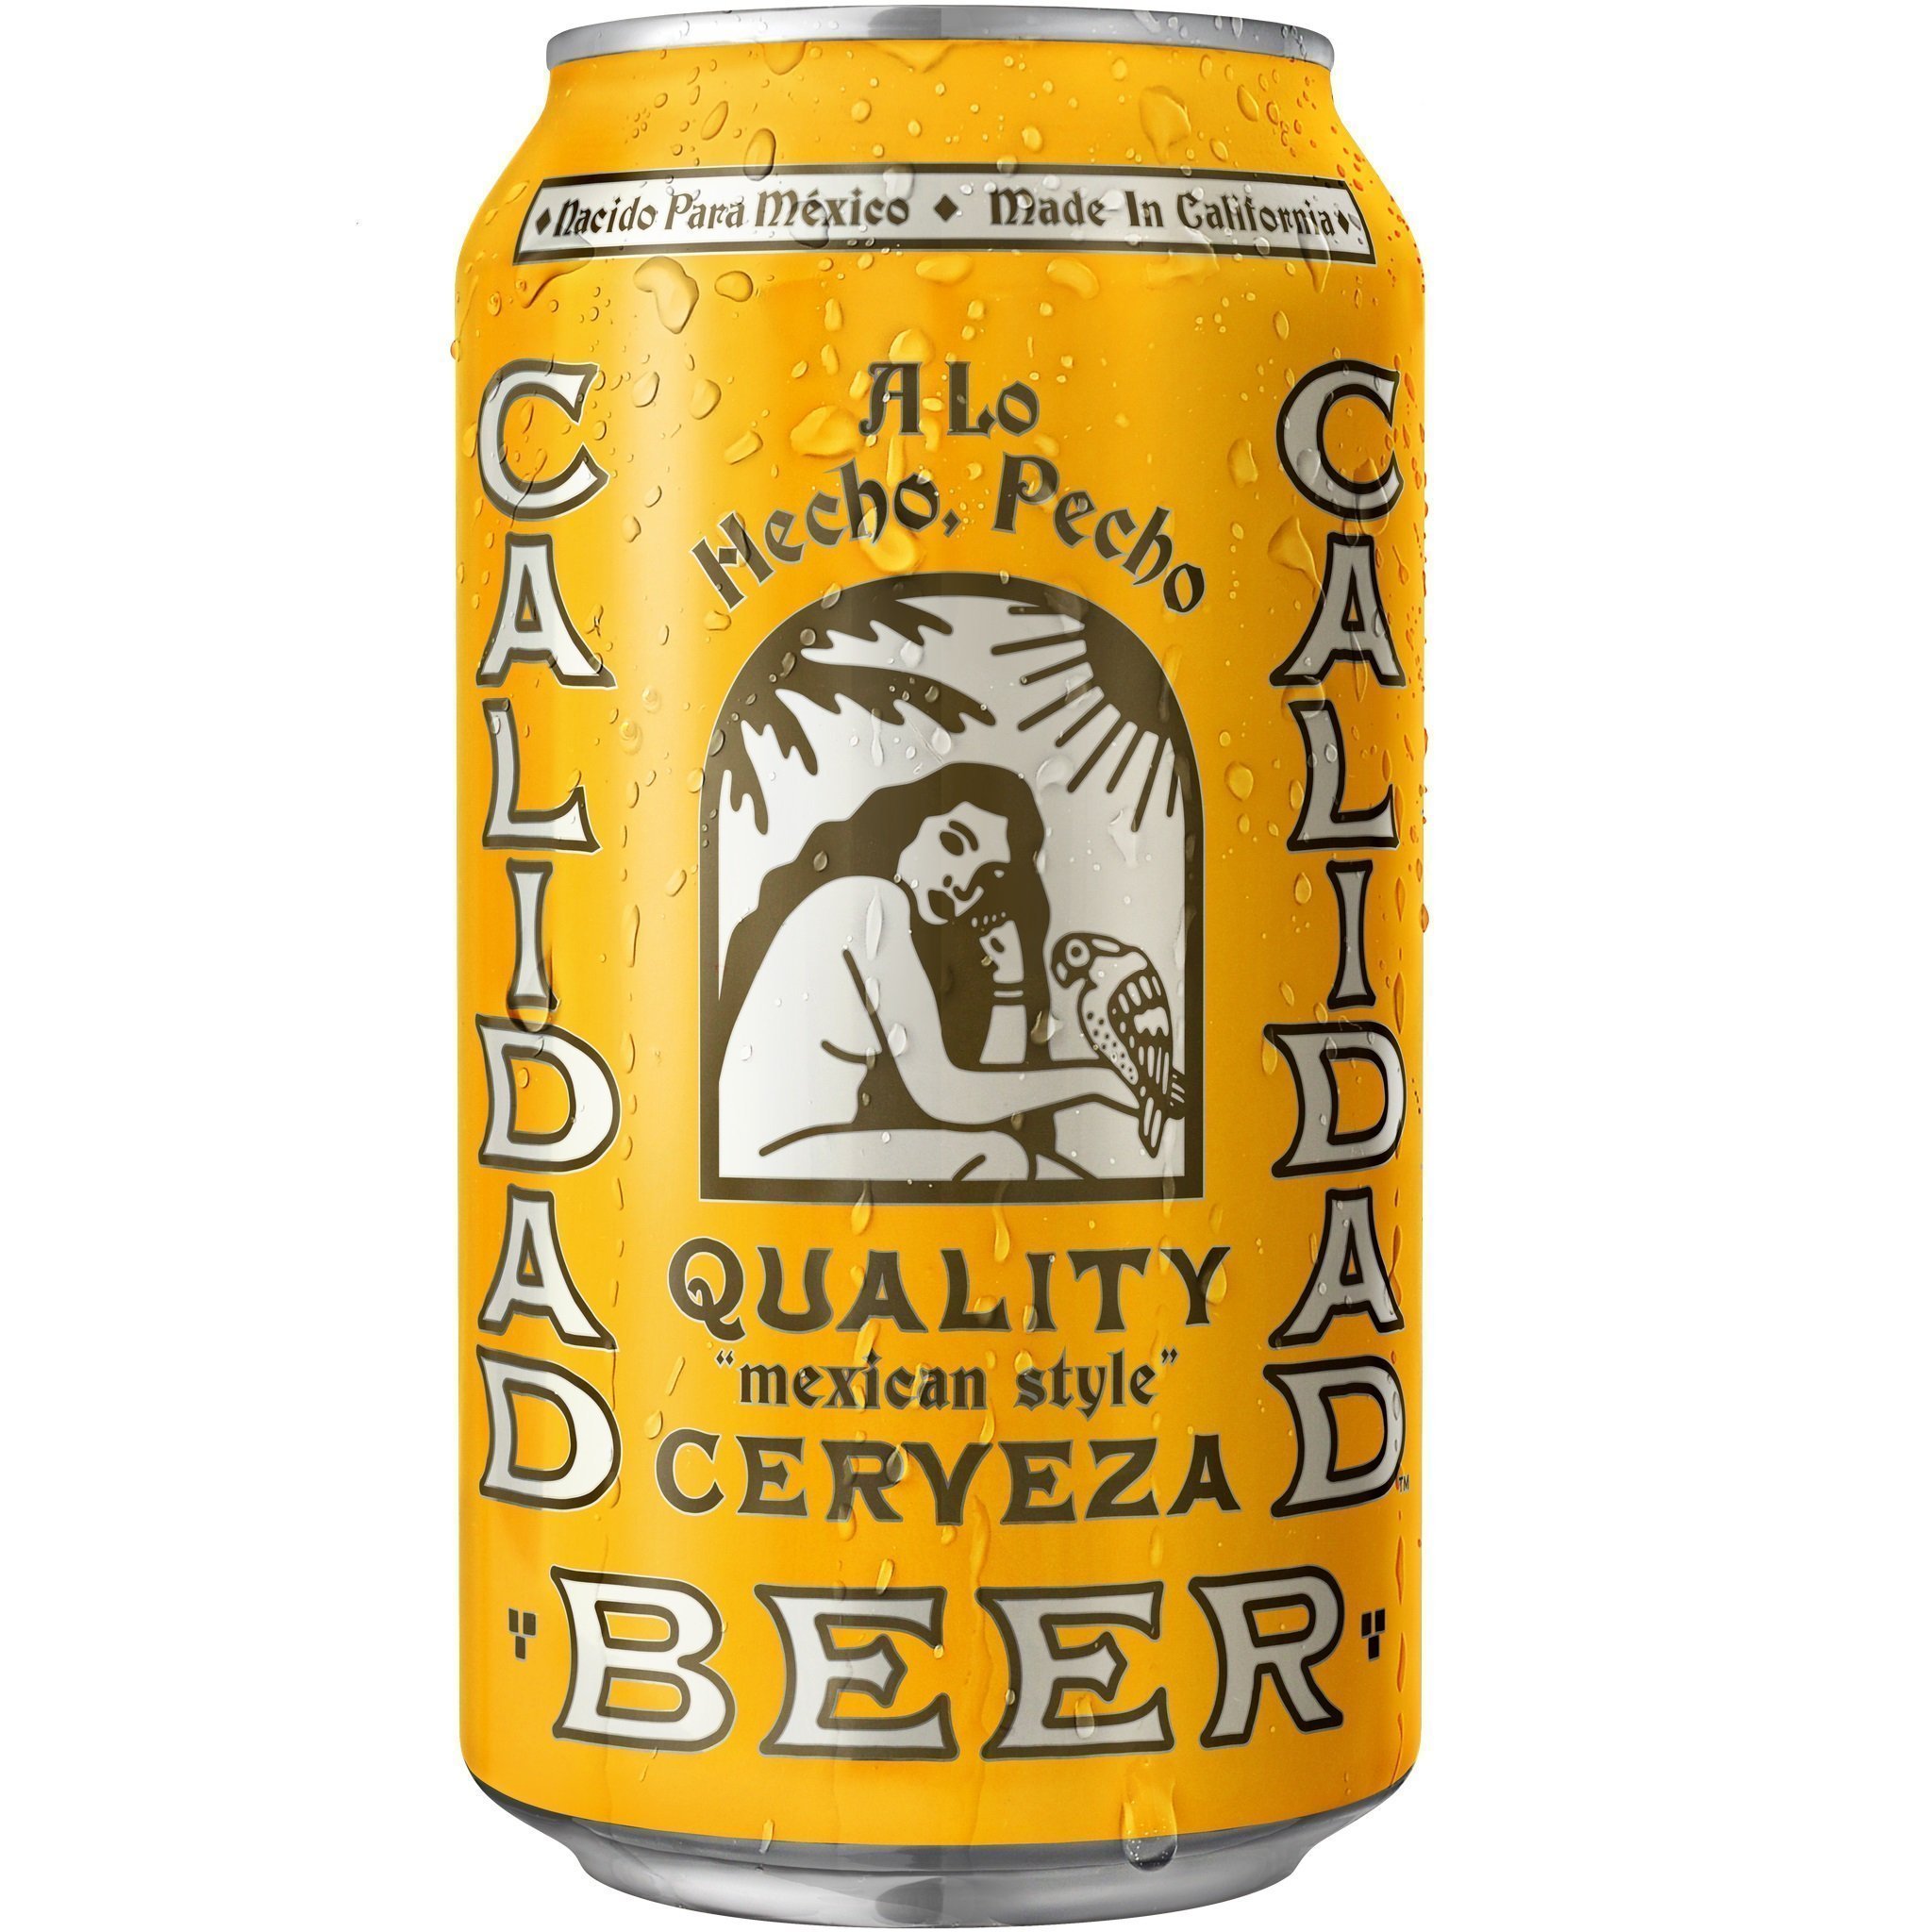 7. Calidad Beer 